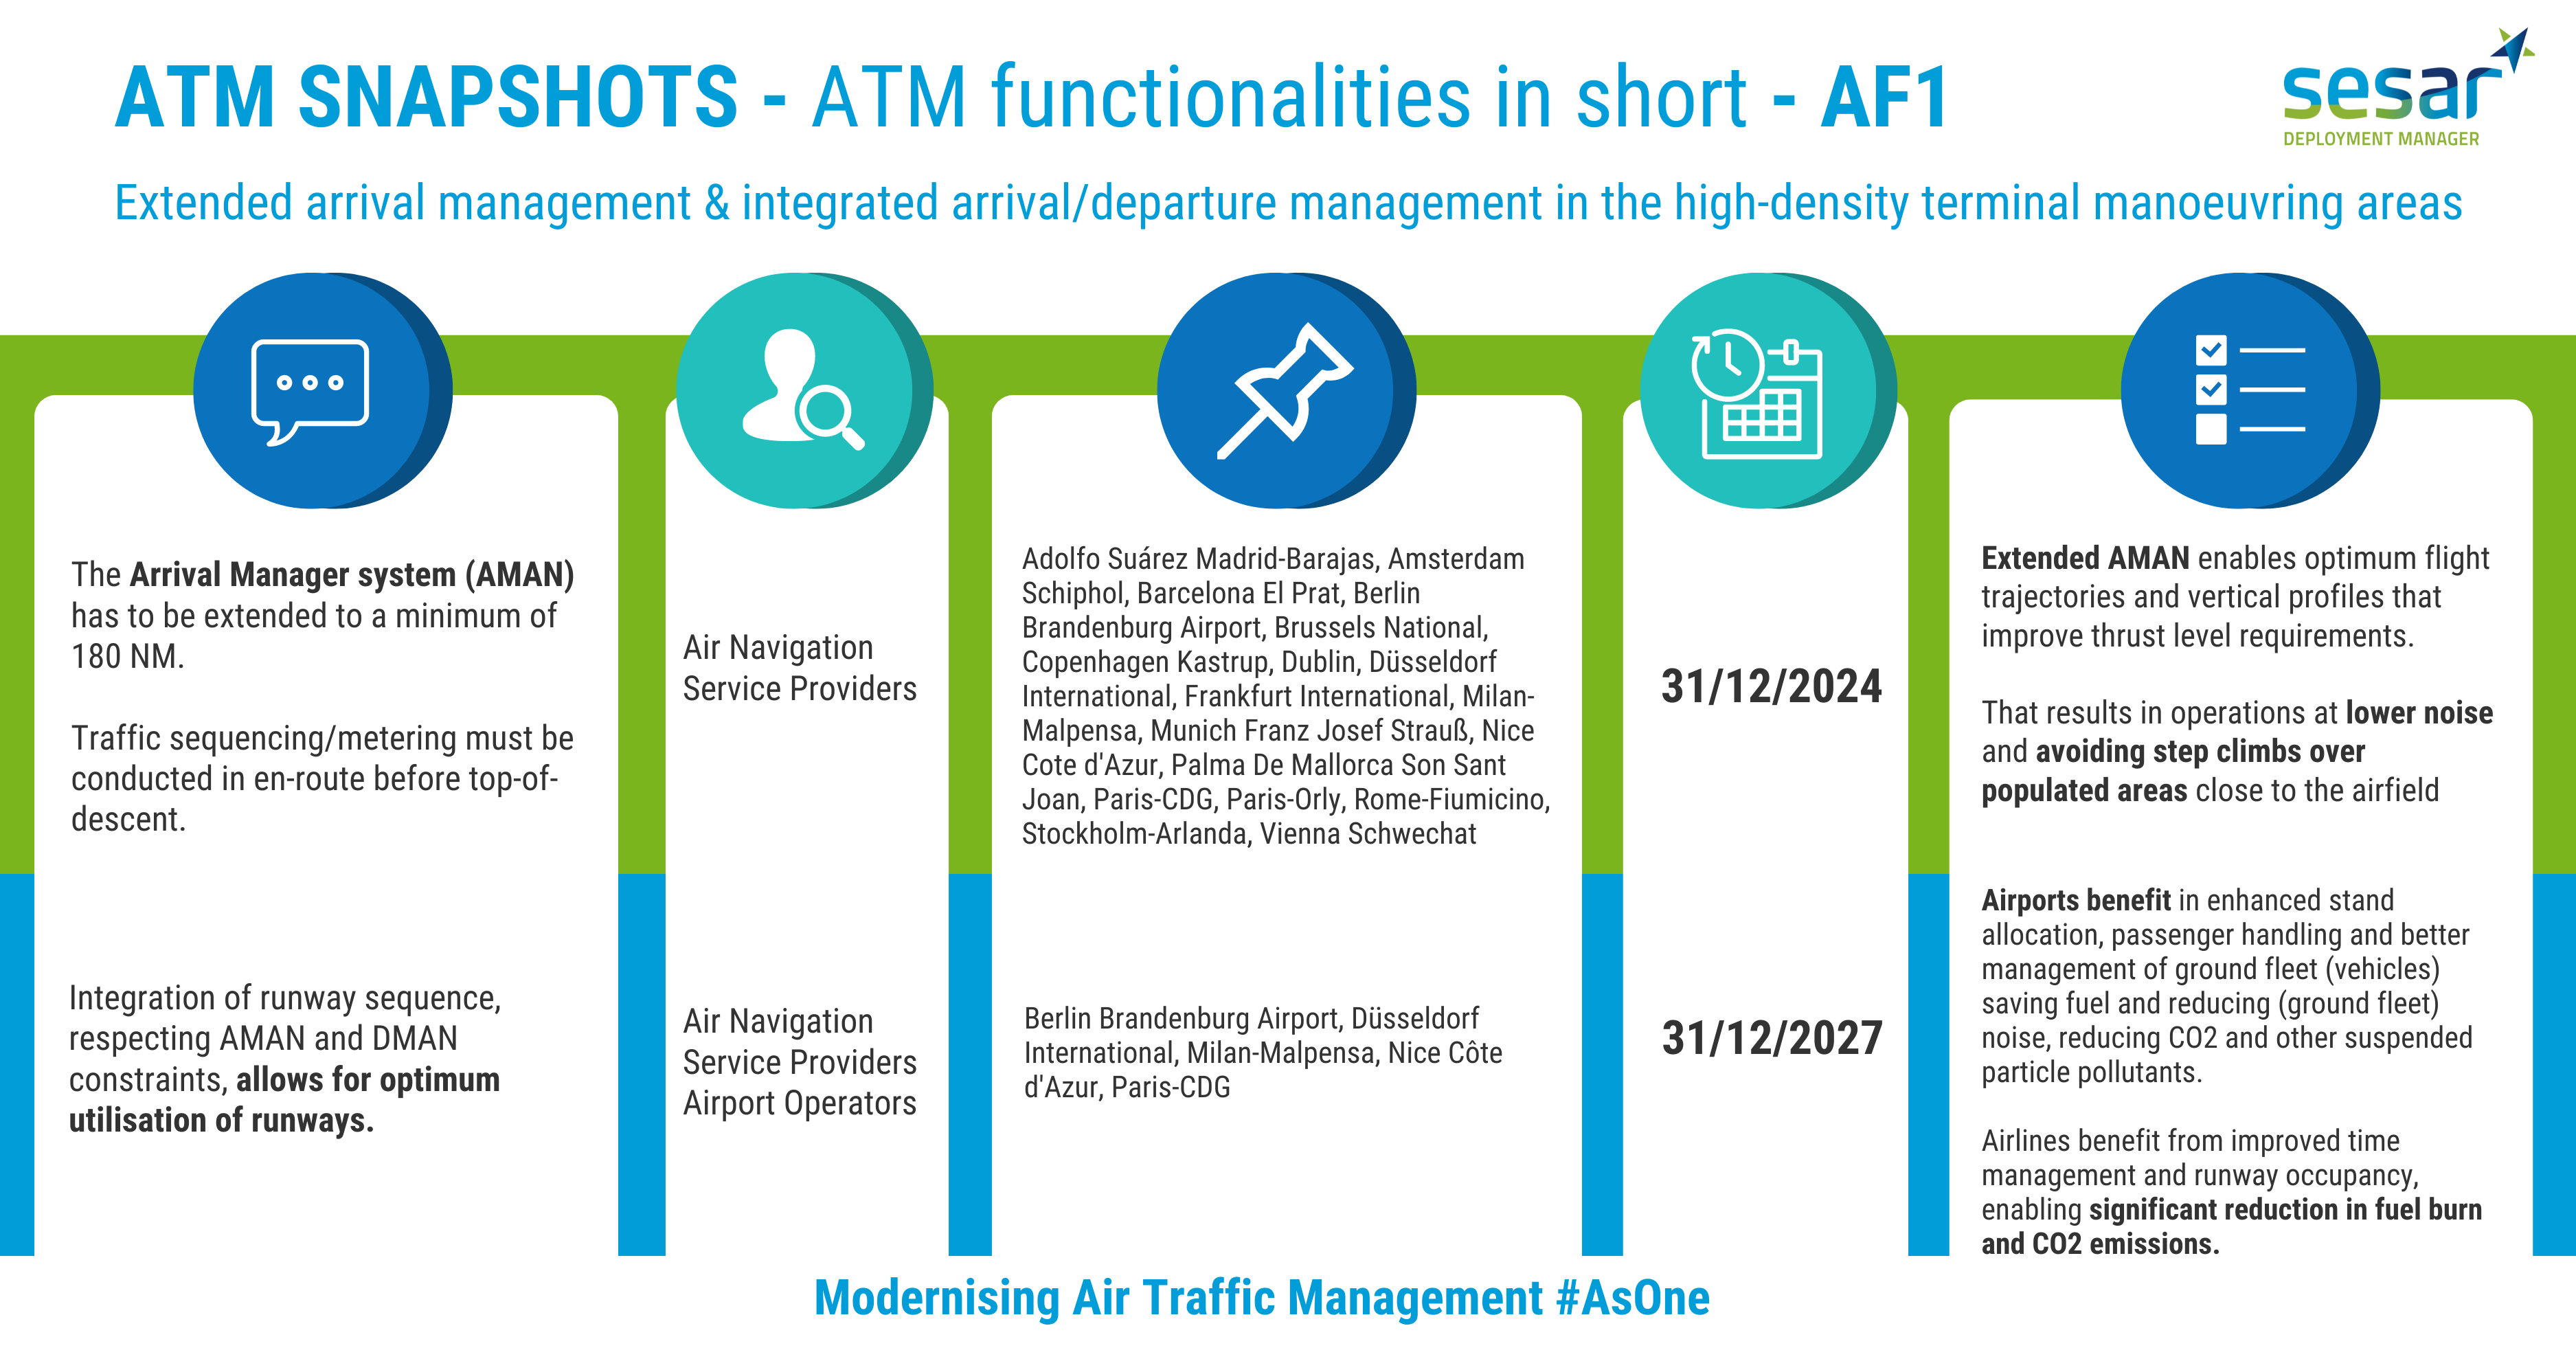 ATM Snapshot Functionality AF 1